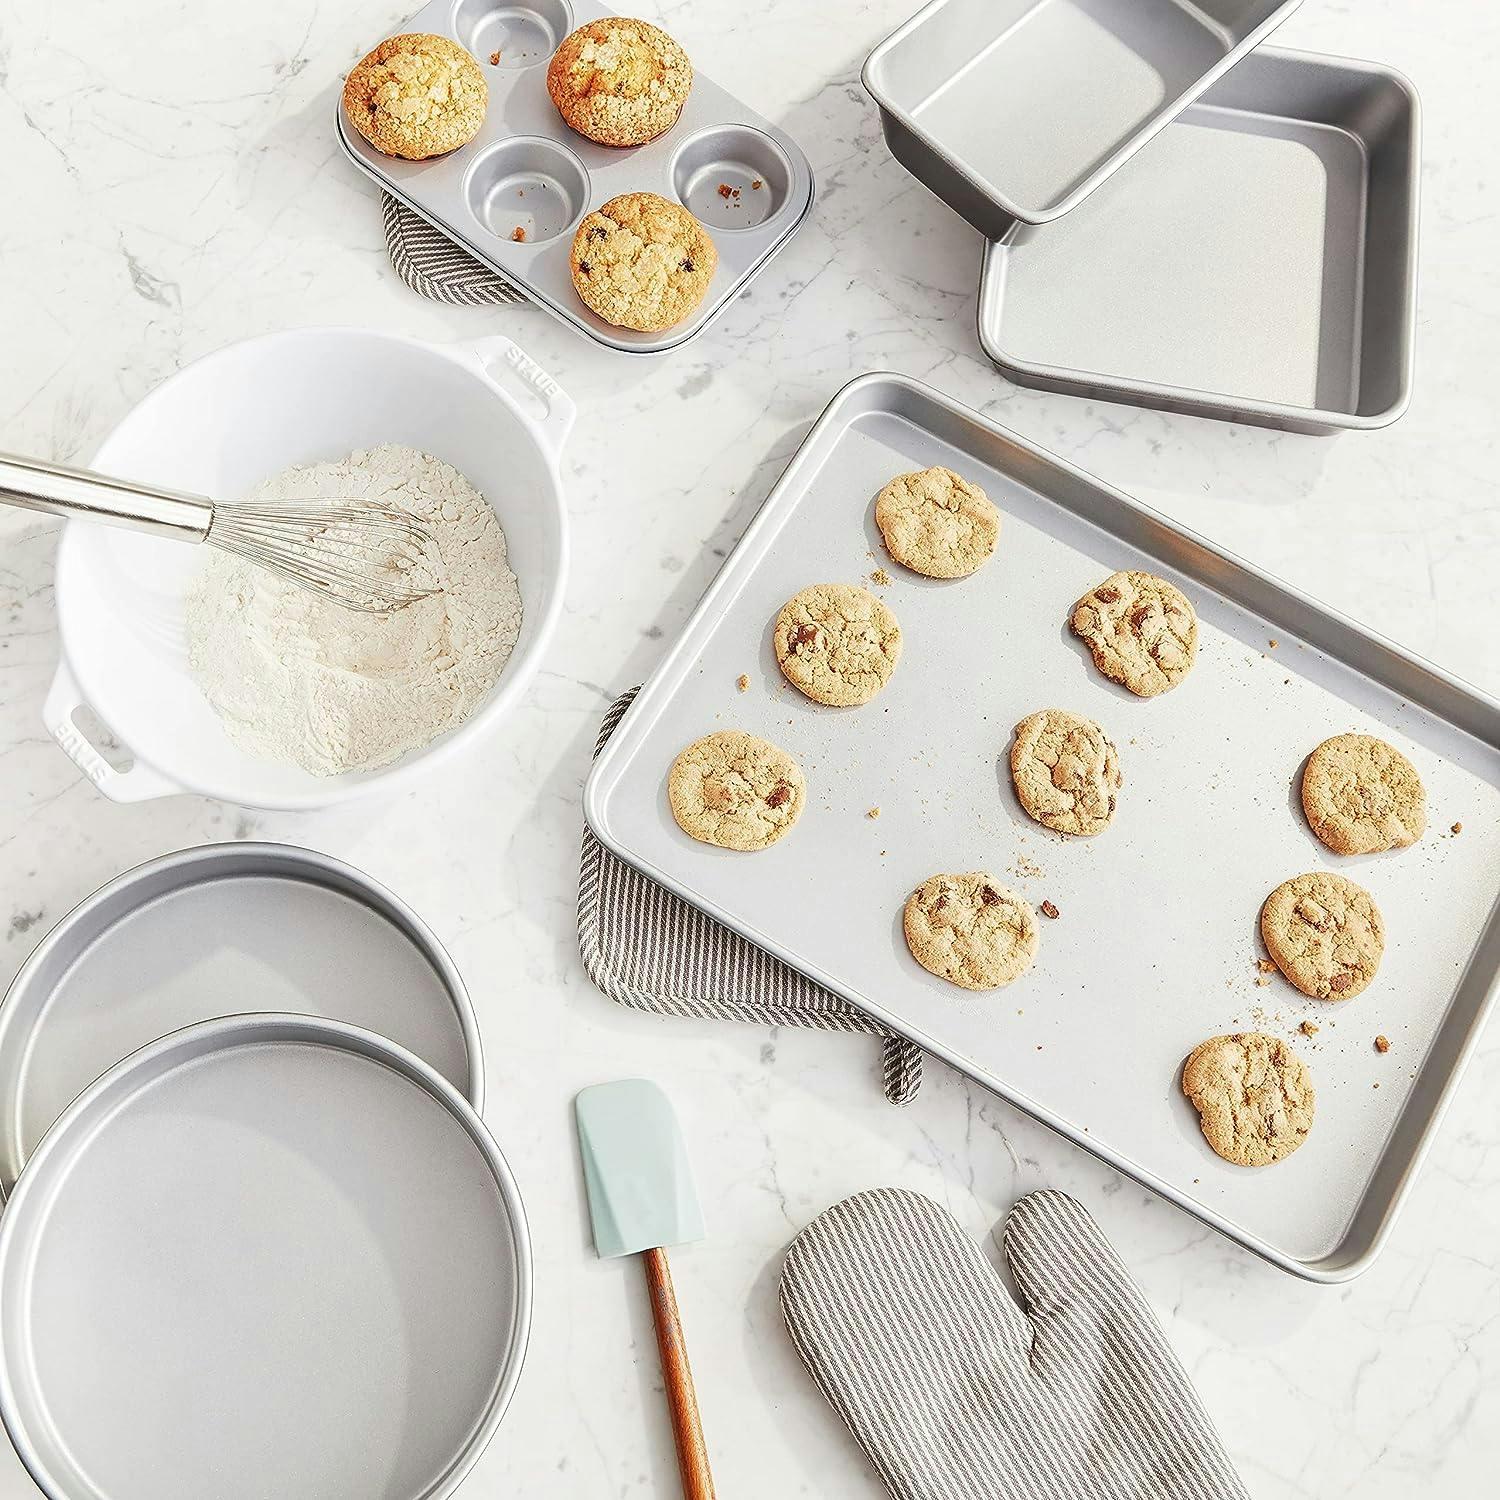 Cuisinart 6-Piece Bakeware Essentials Set, Silver